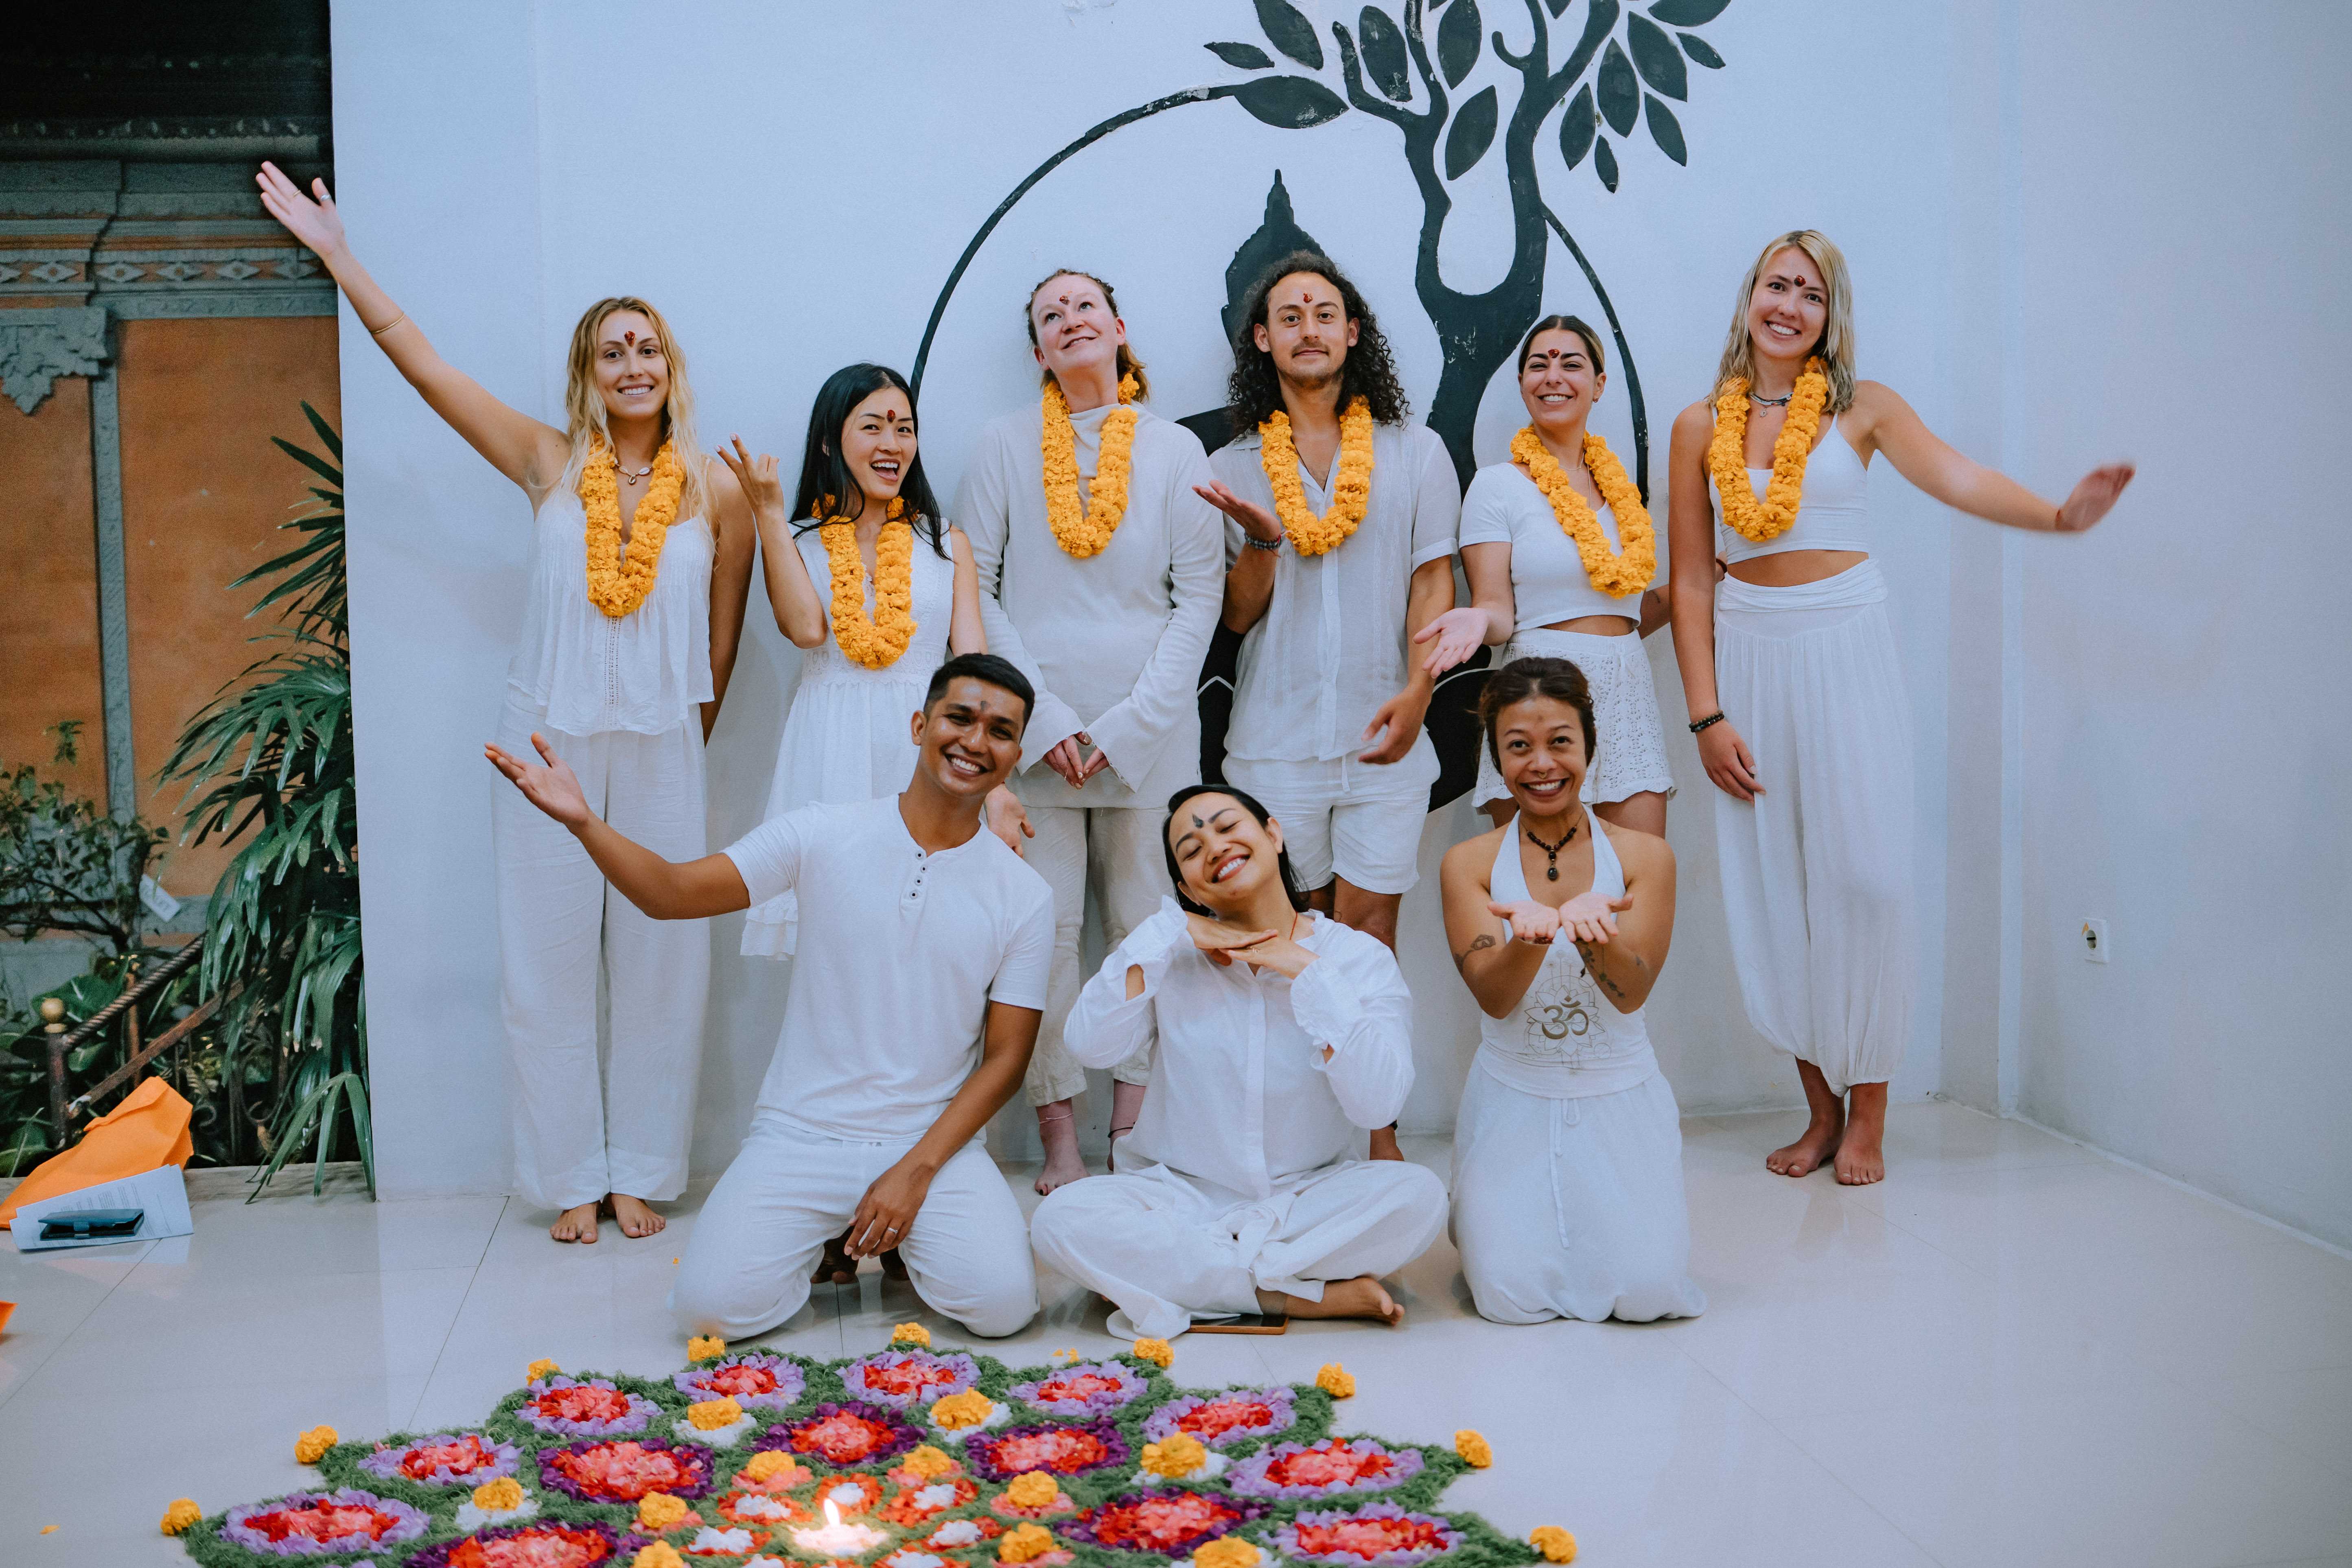 Yoga Teacher Training in Bali  Bali Yoga School - Bali Yoga Center